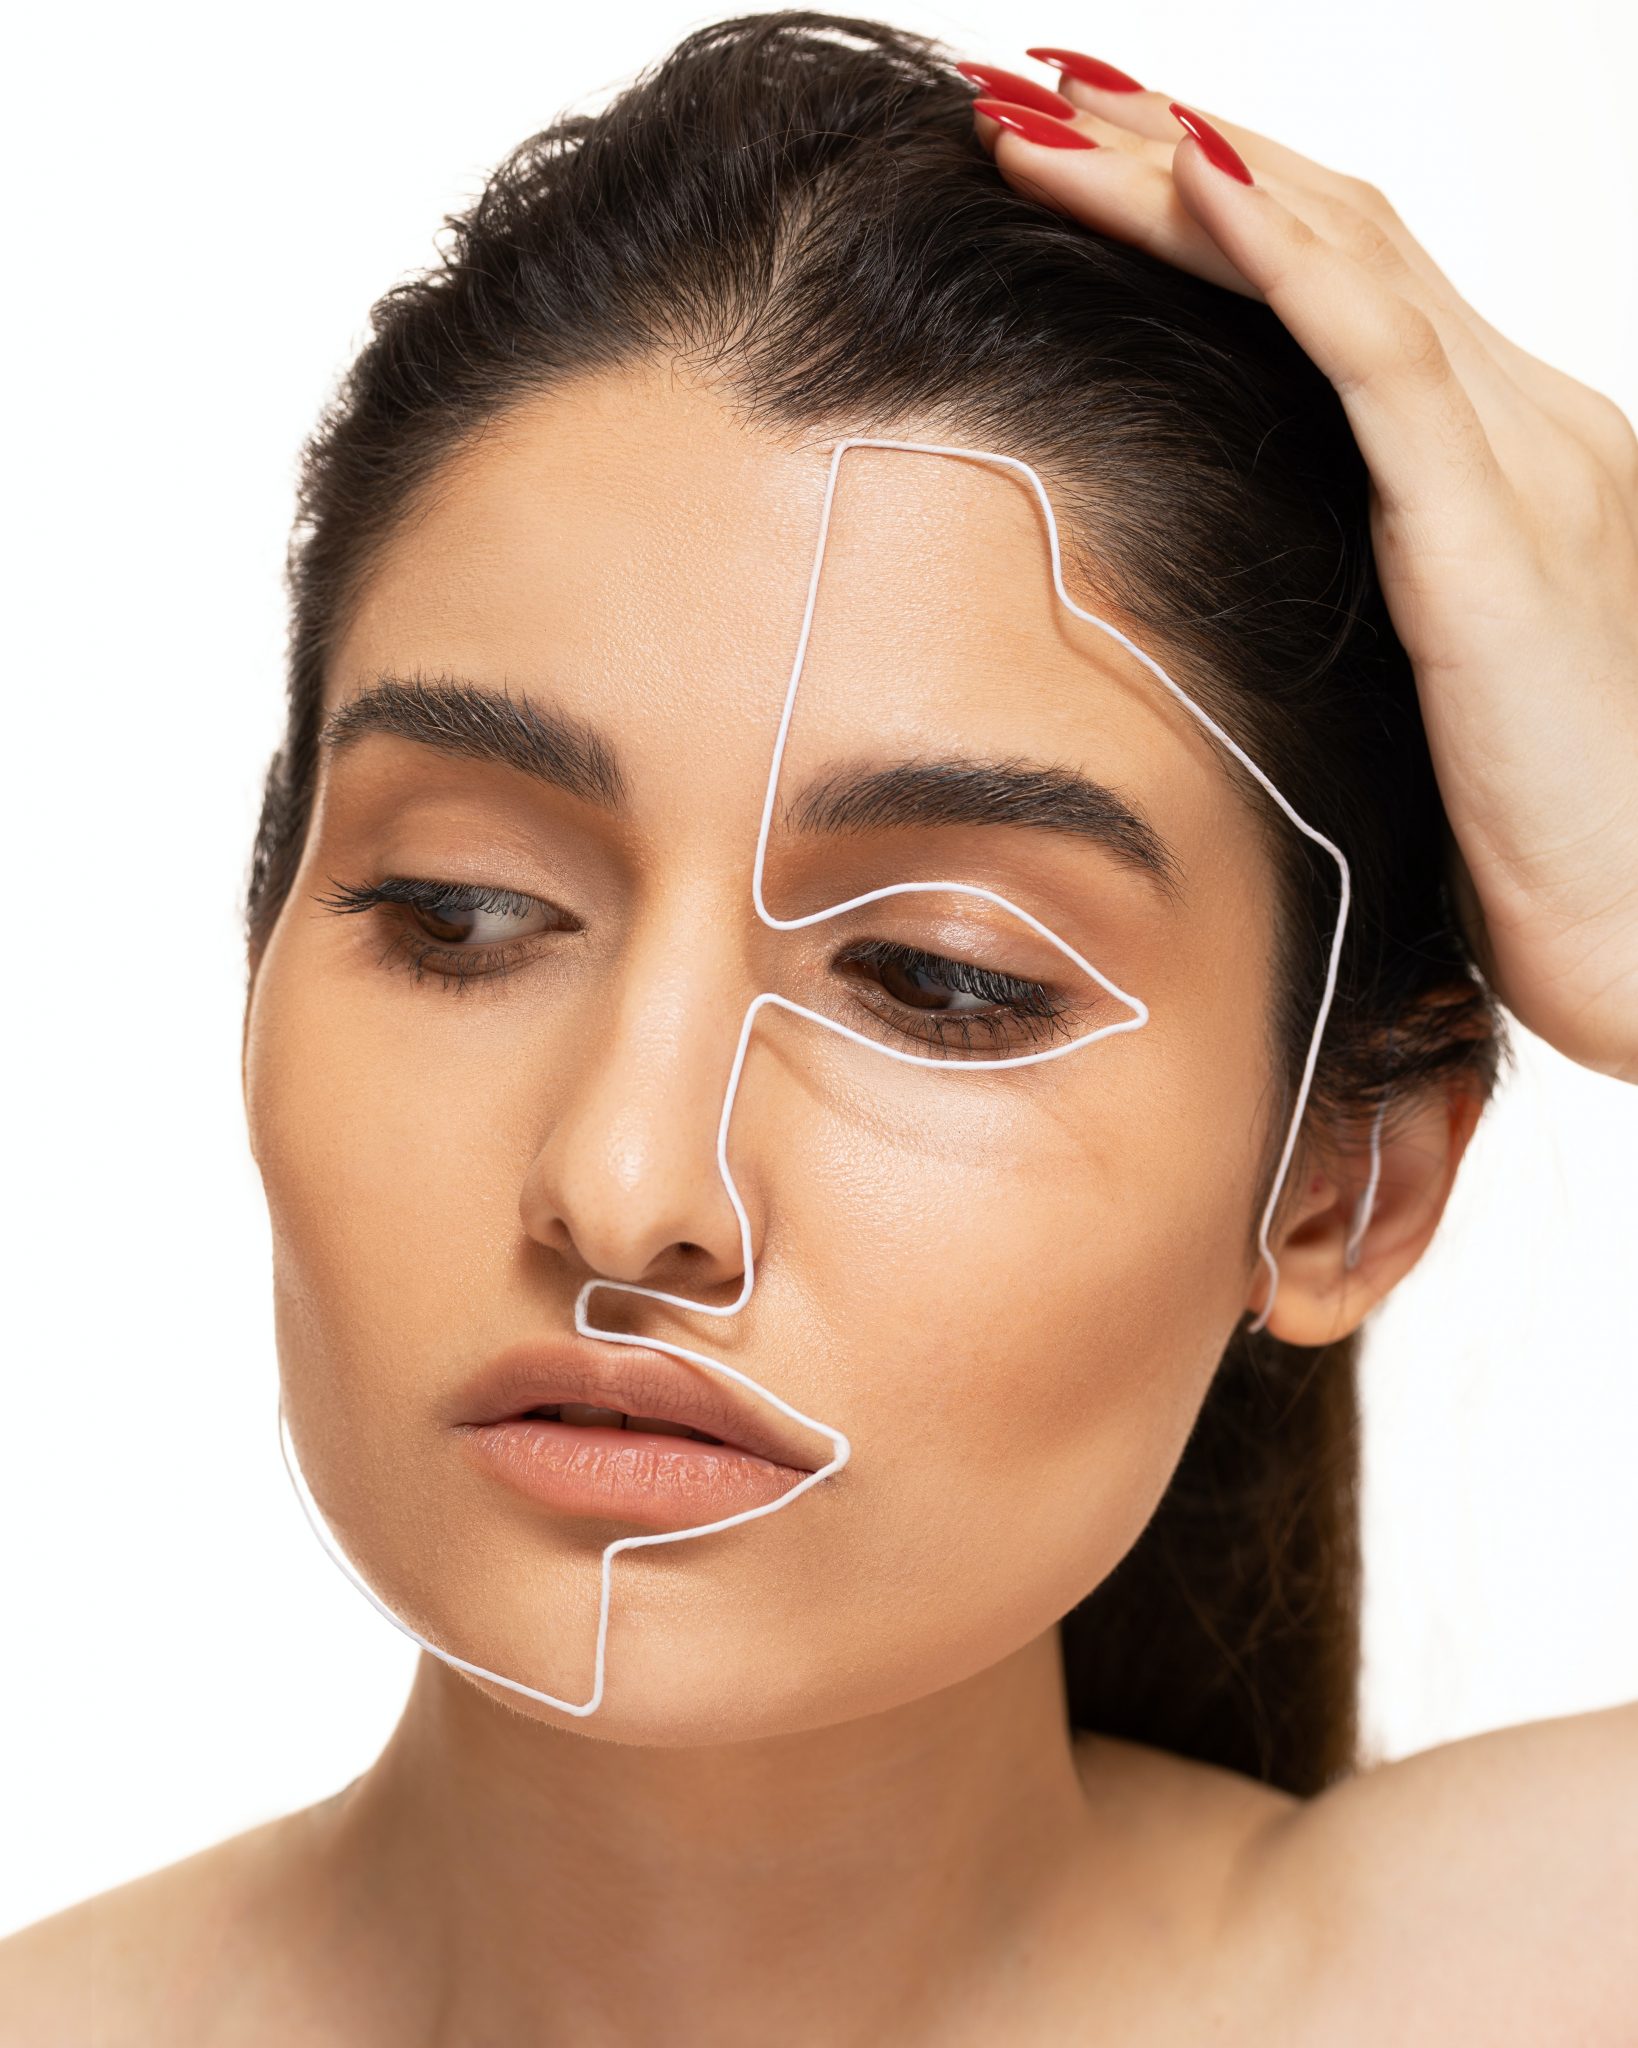 Facial Rejuvenation Treatment - Dr. Nestor